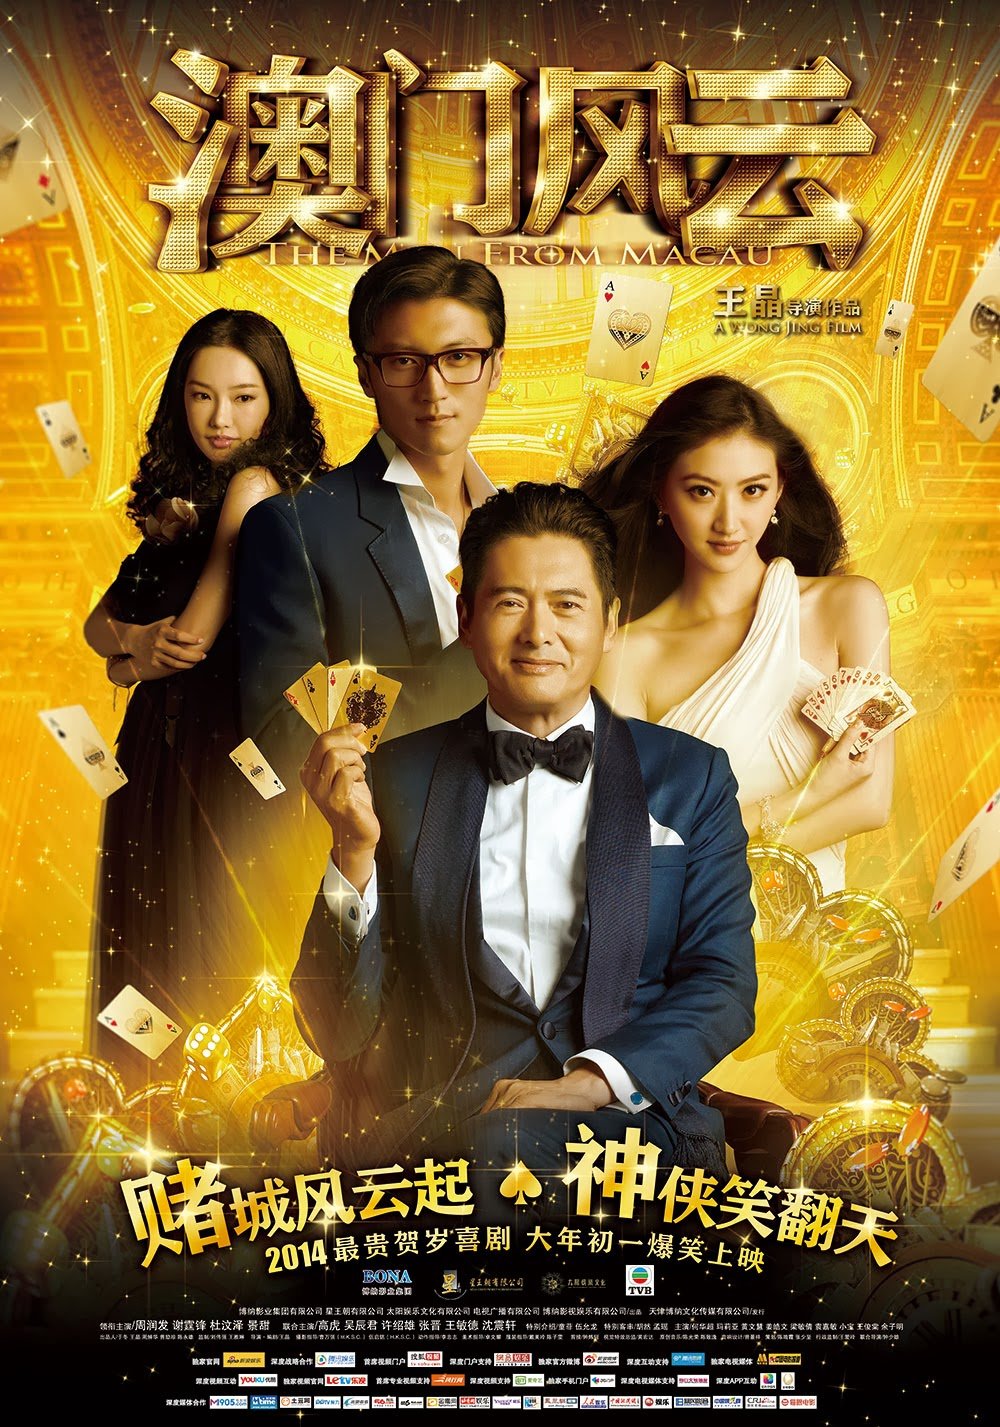 L'affiche originale du film Ao Men feng yun en mandarin